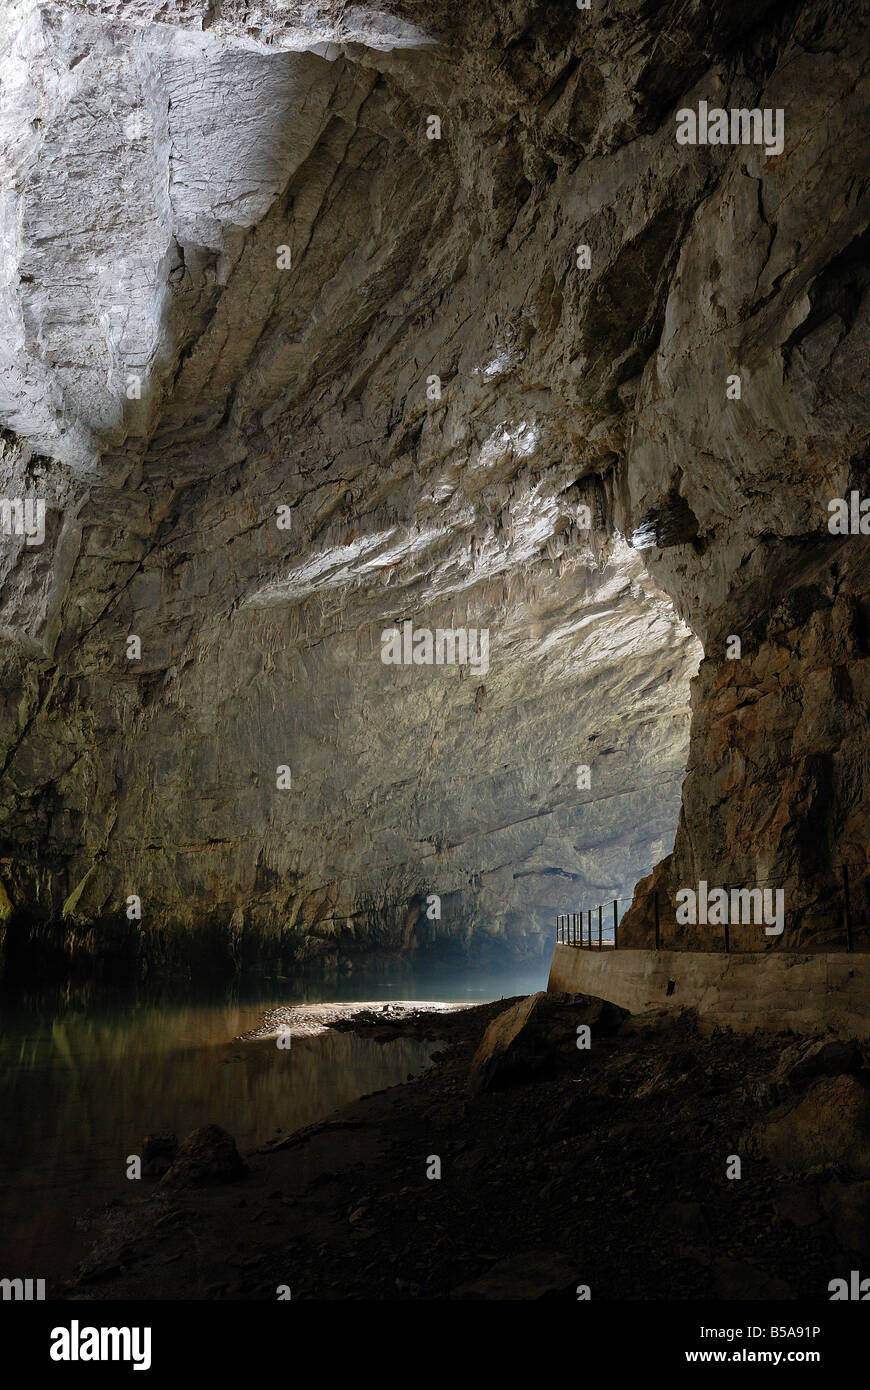 Entrance hall of turistical cave Planinska jama in Slovenia Stock Photo